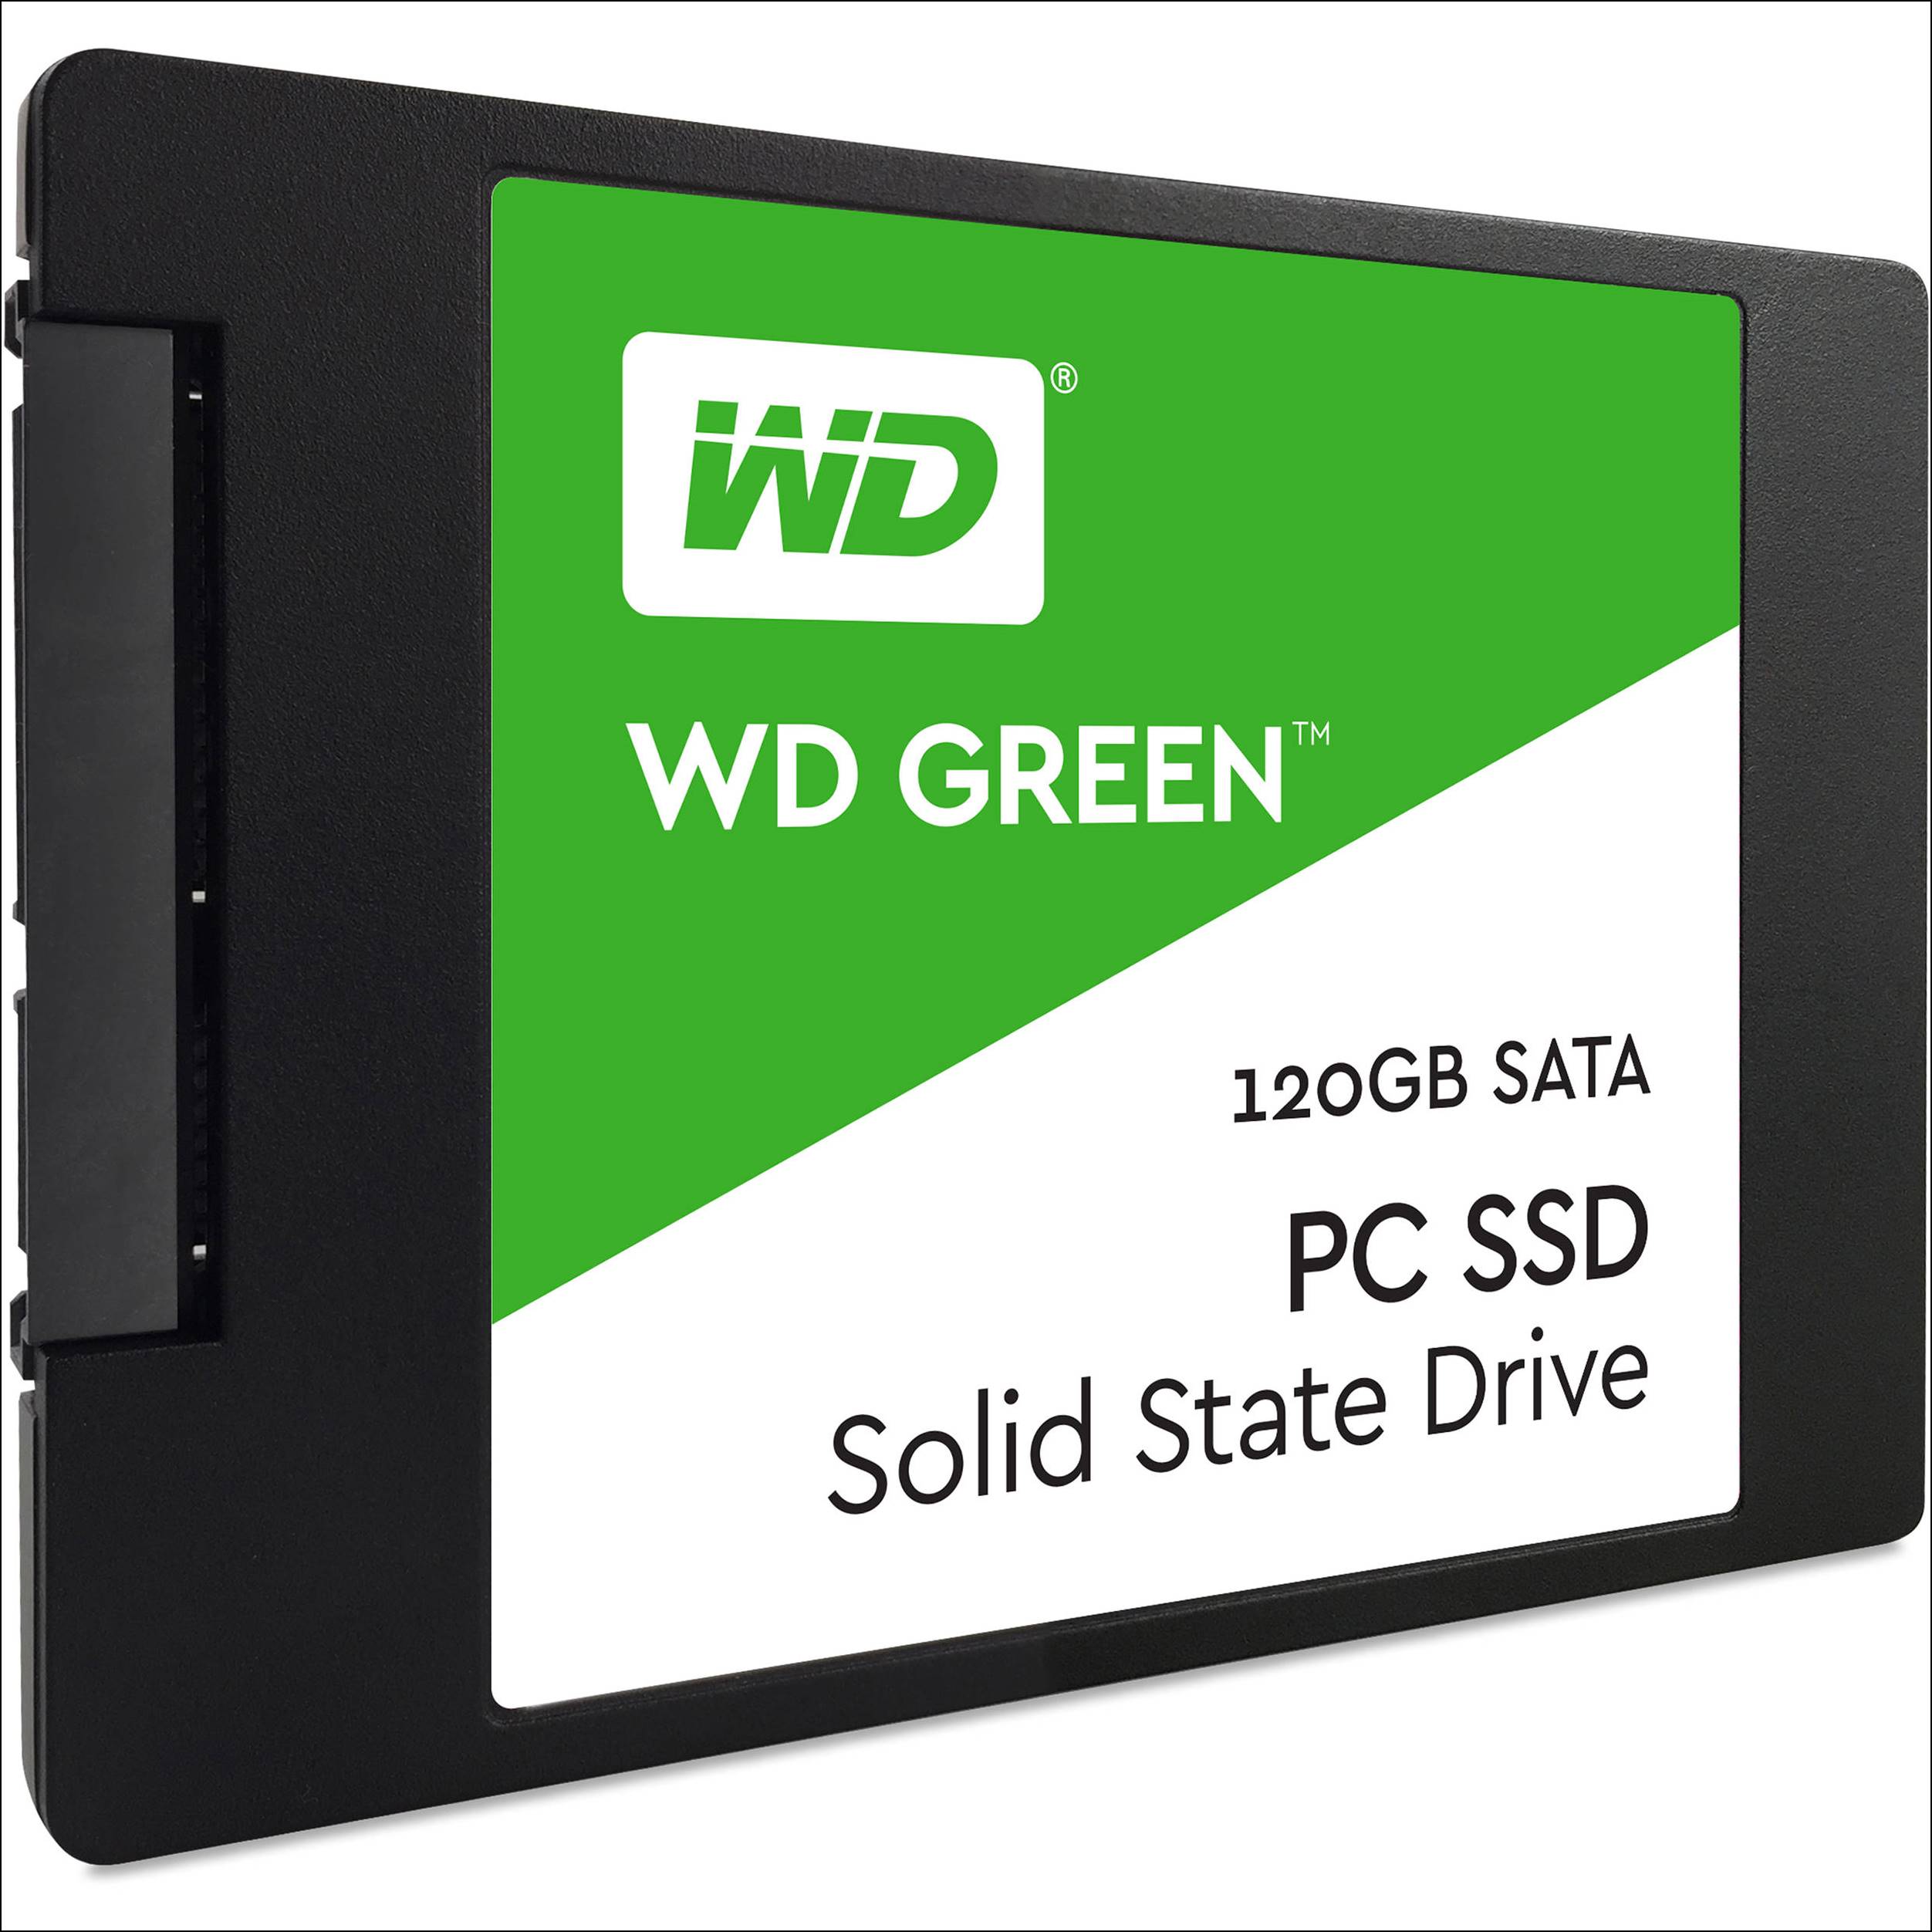 SSD - WDC Green PC SSD 120GB (Rp 395.000)